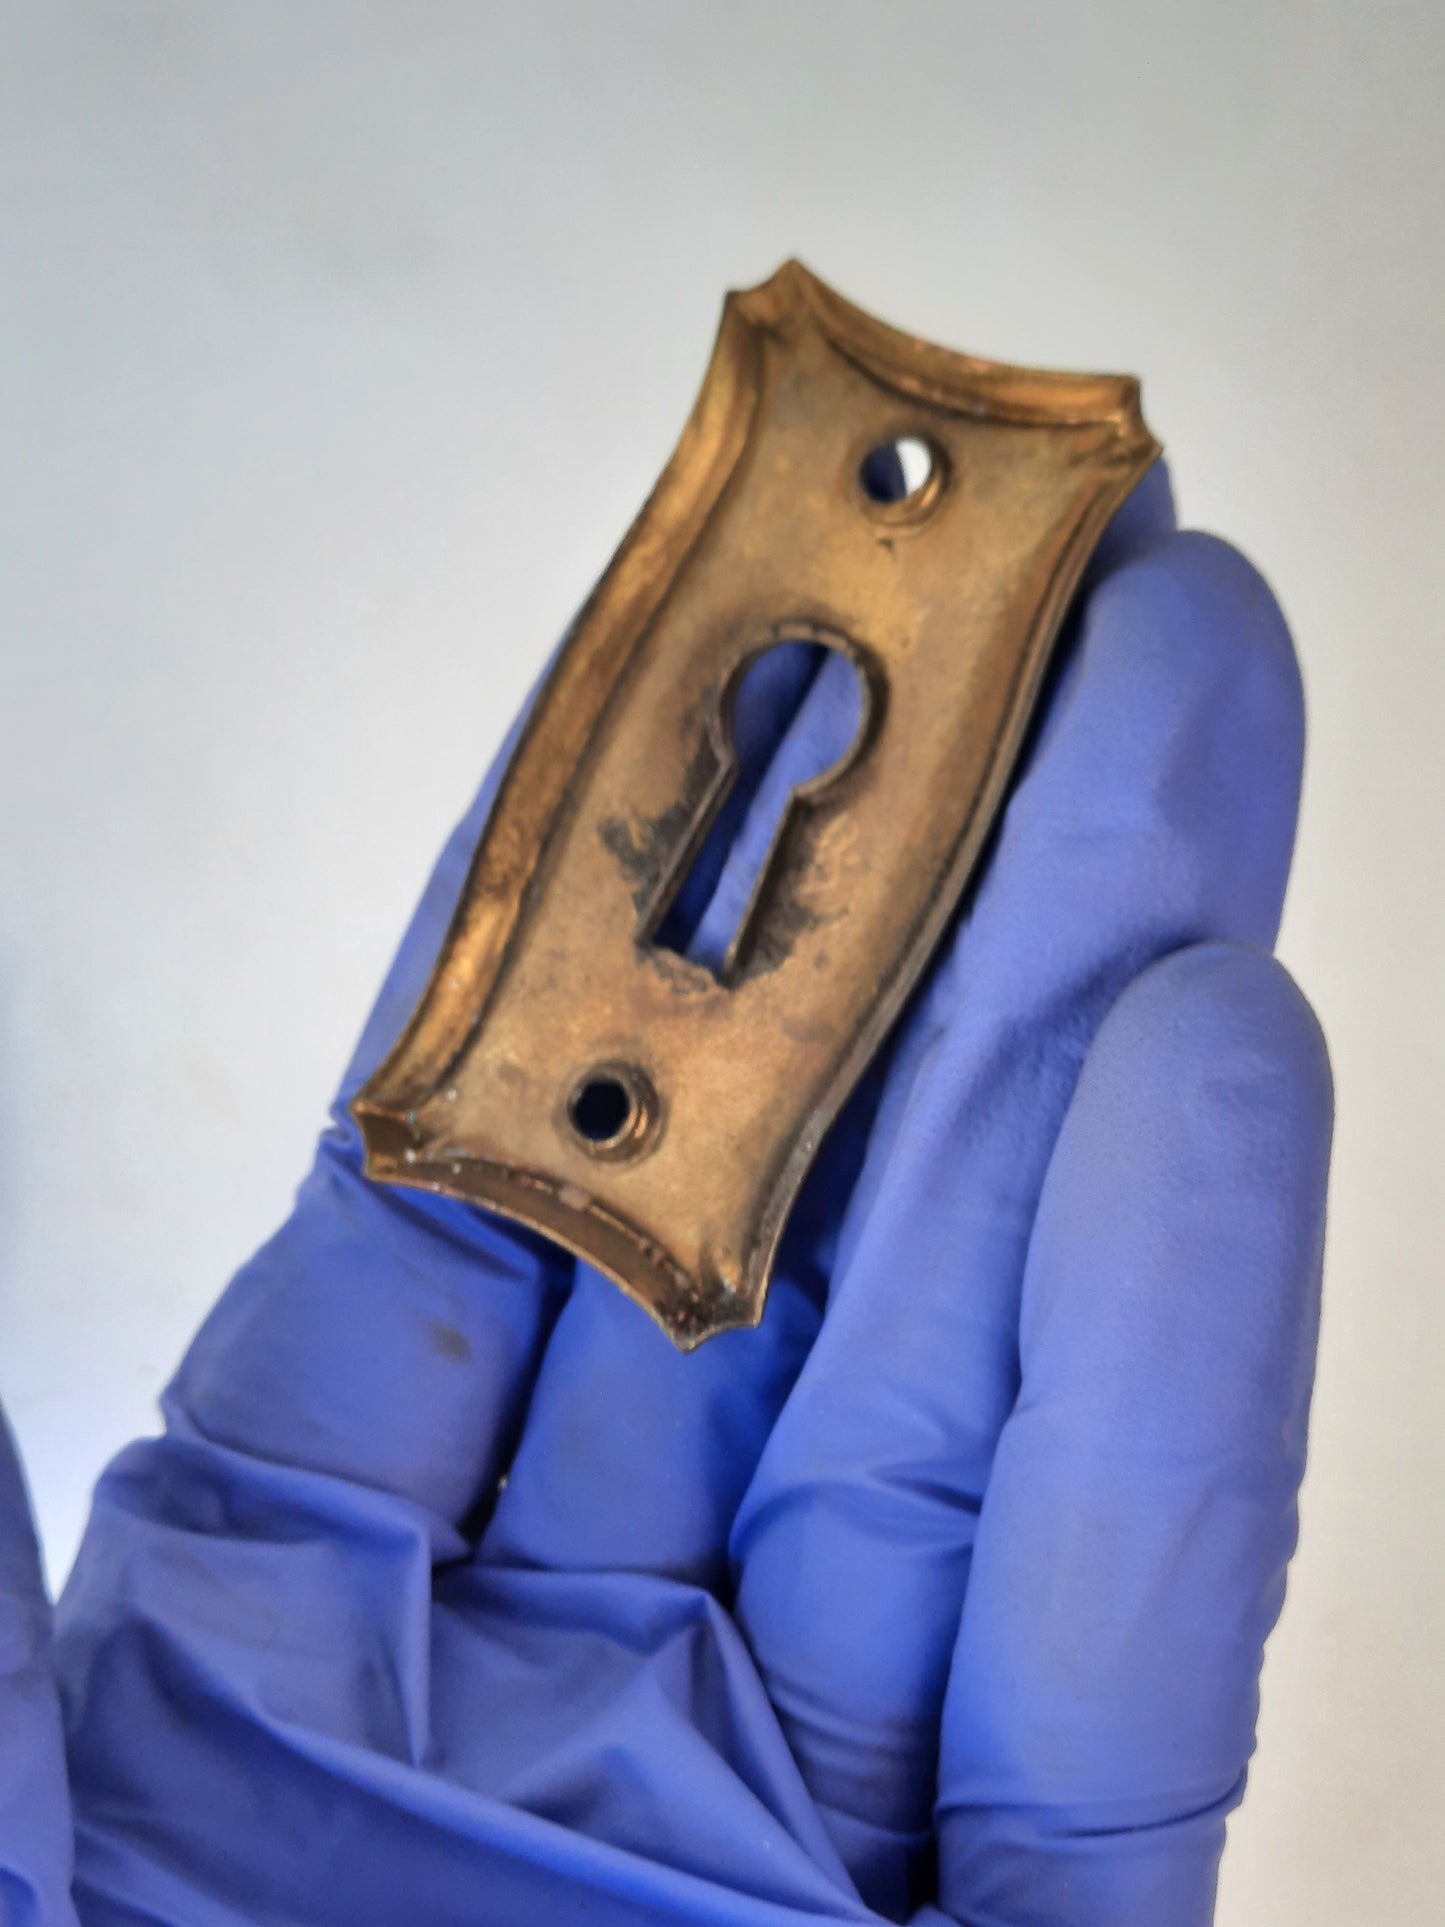 Antique Brass Pair of Keyhole Covers, Ornate Key Hole Escutcheon Plates 121502